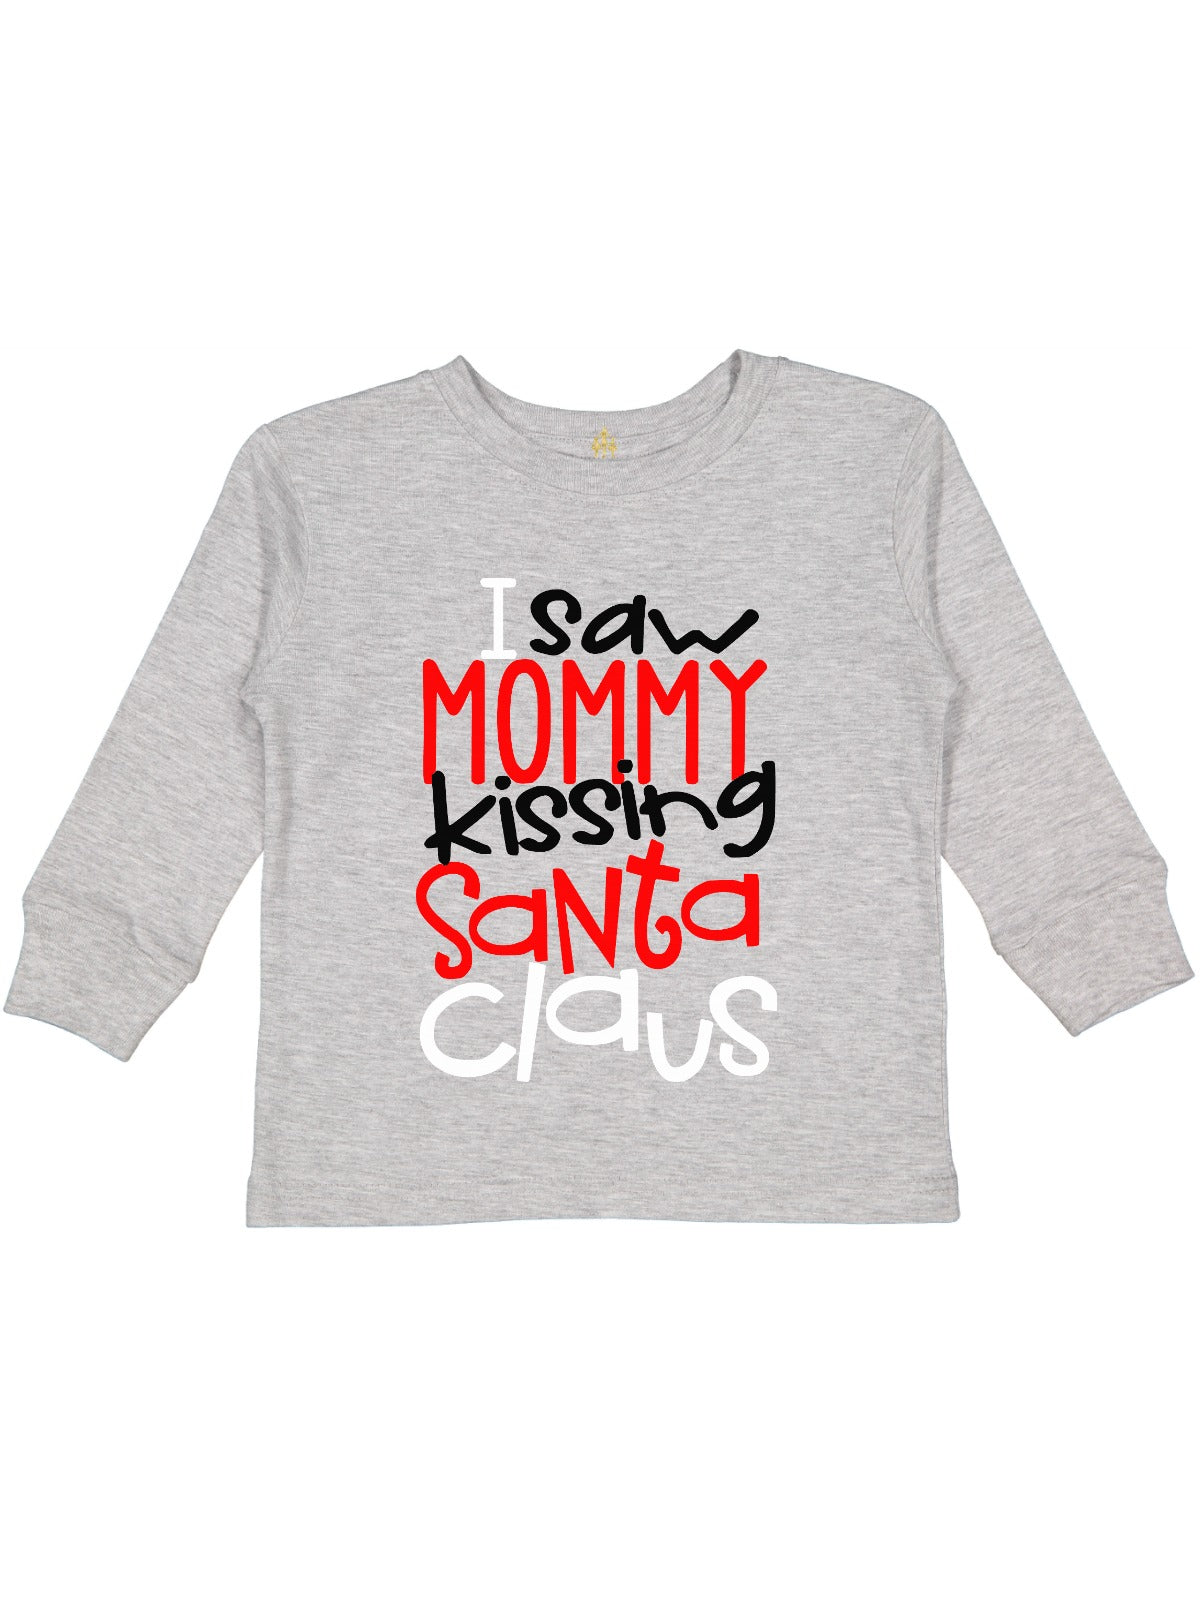 I saw mommy kissing santa kids t-shirt